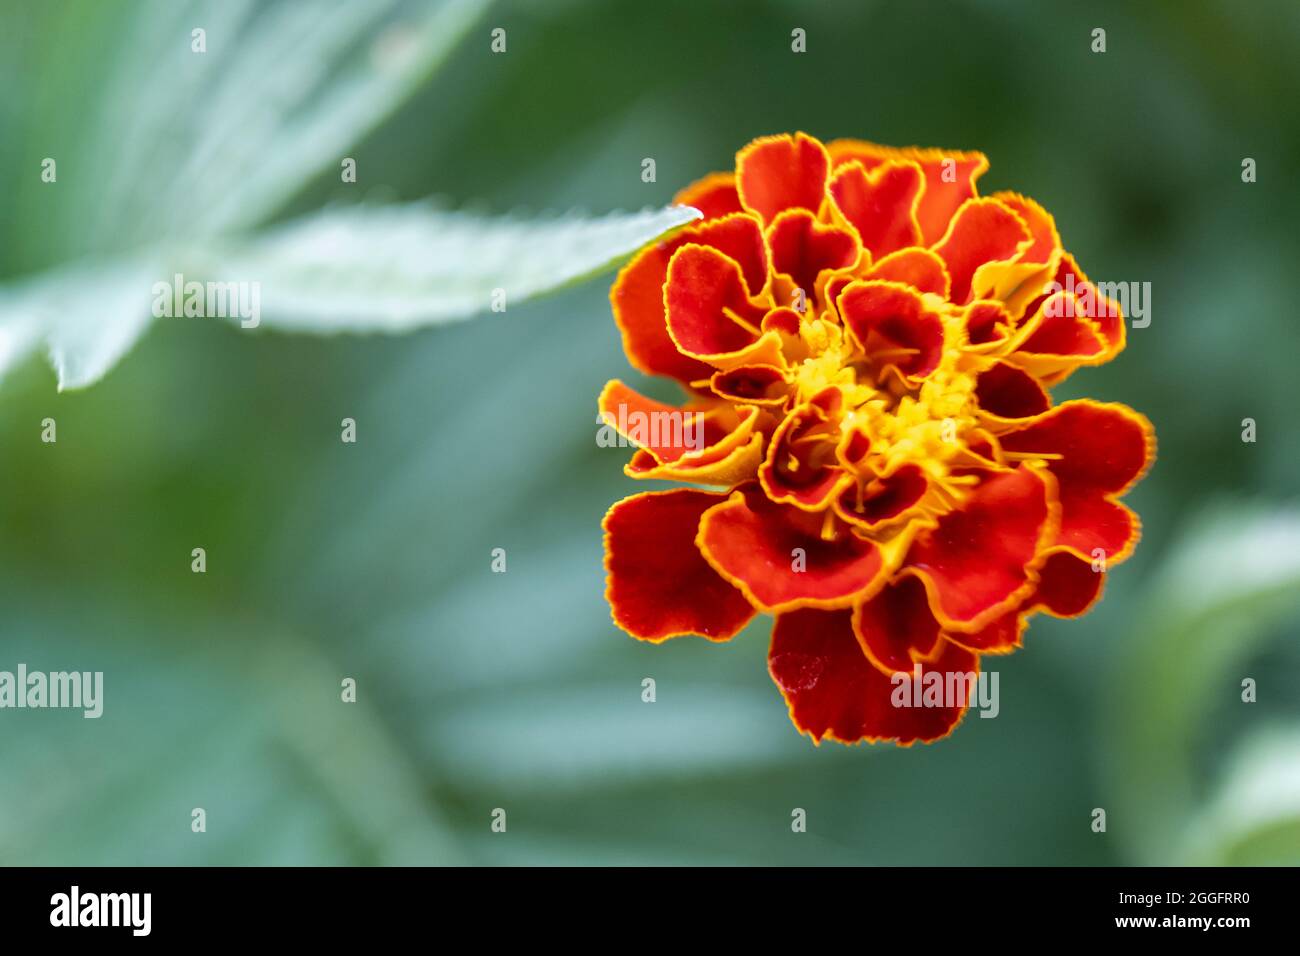 Foto de cerca de la flor de la caléndula roja y amarilla, foto macro de una  caléndula naranja Fotografía de stock - Alamy